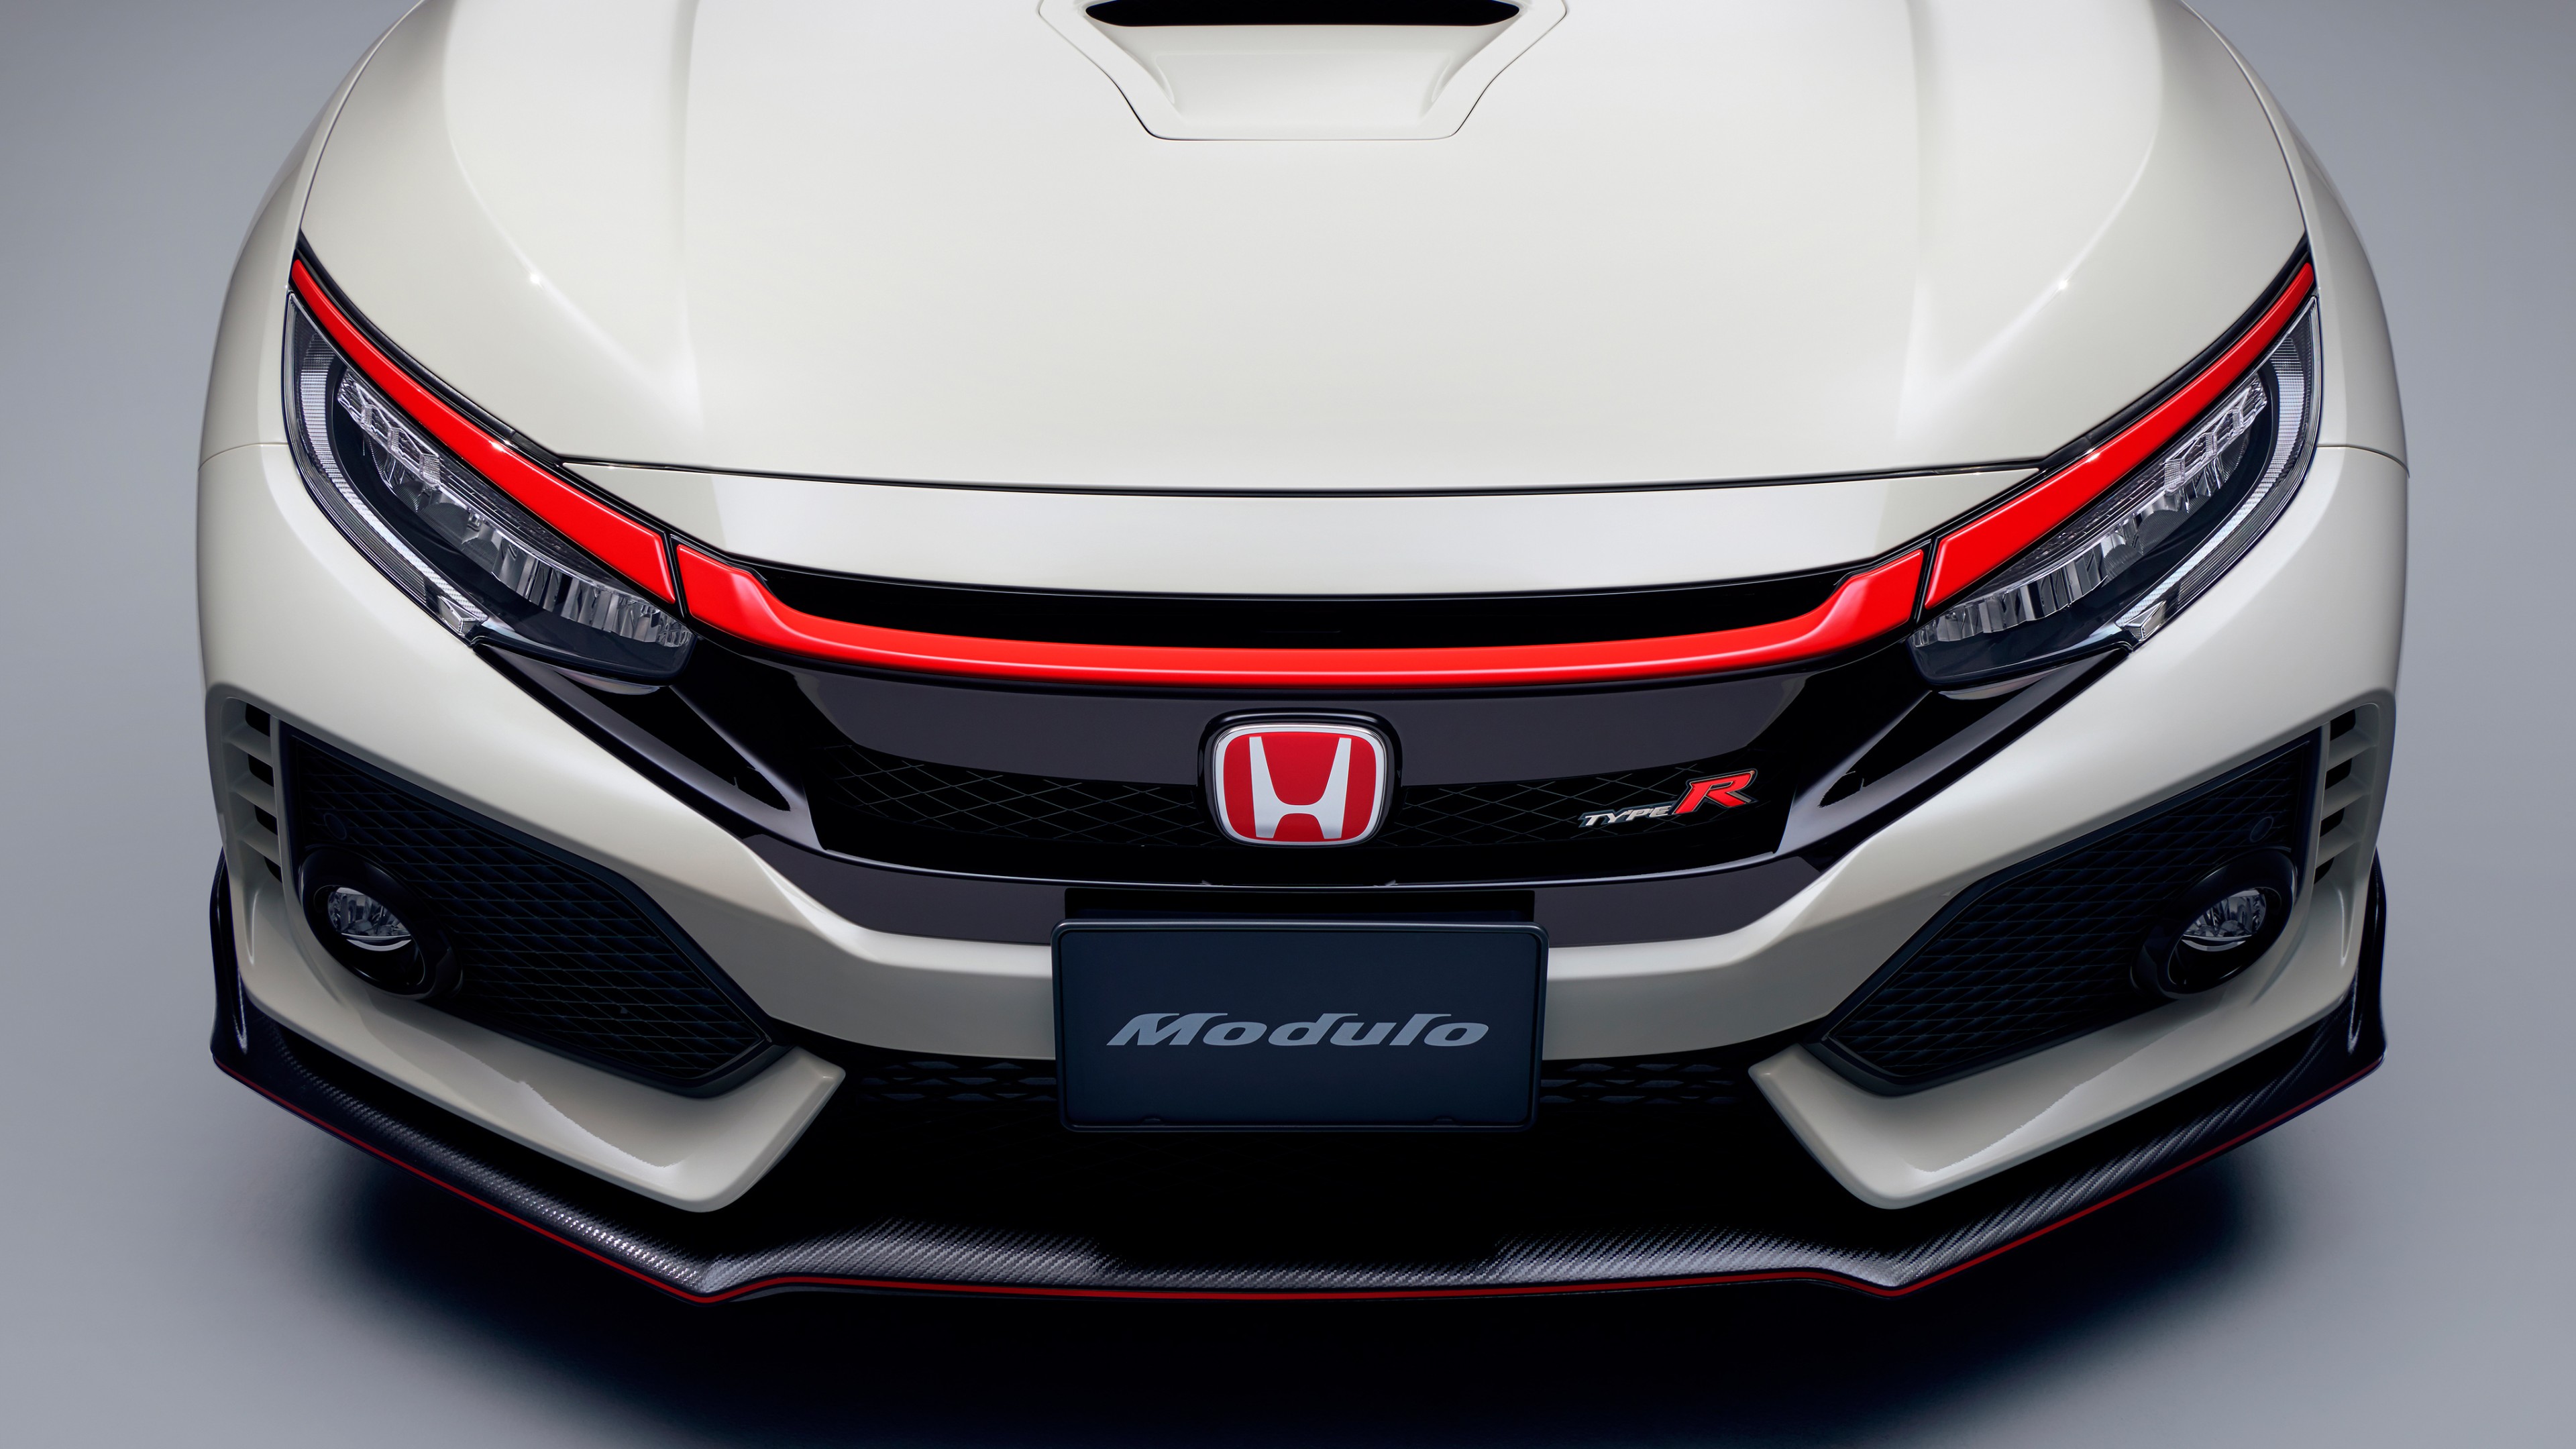 Modulo Honda Civic Type R 2017 Wallpaper | HD Car Wallpapers | ID #8153